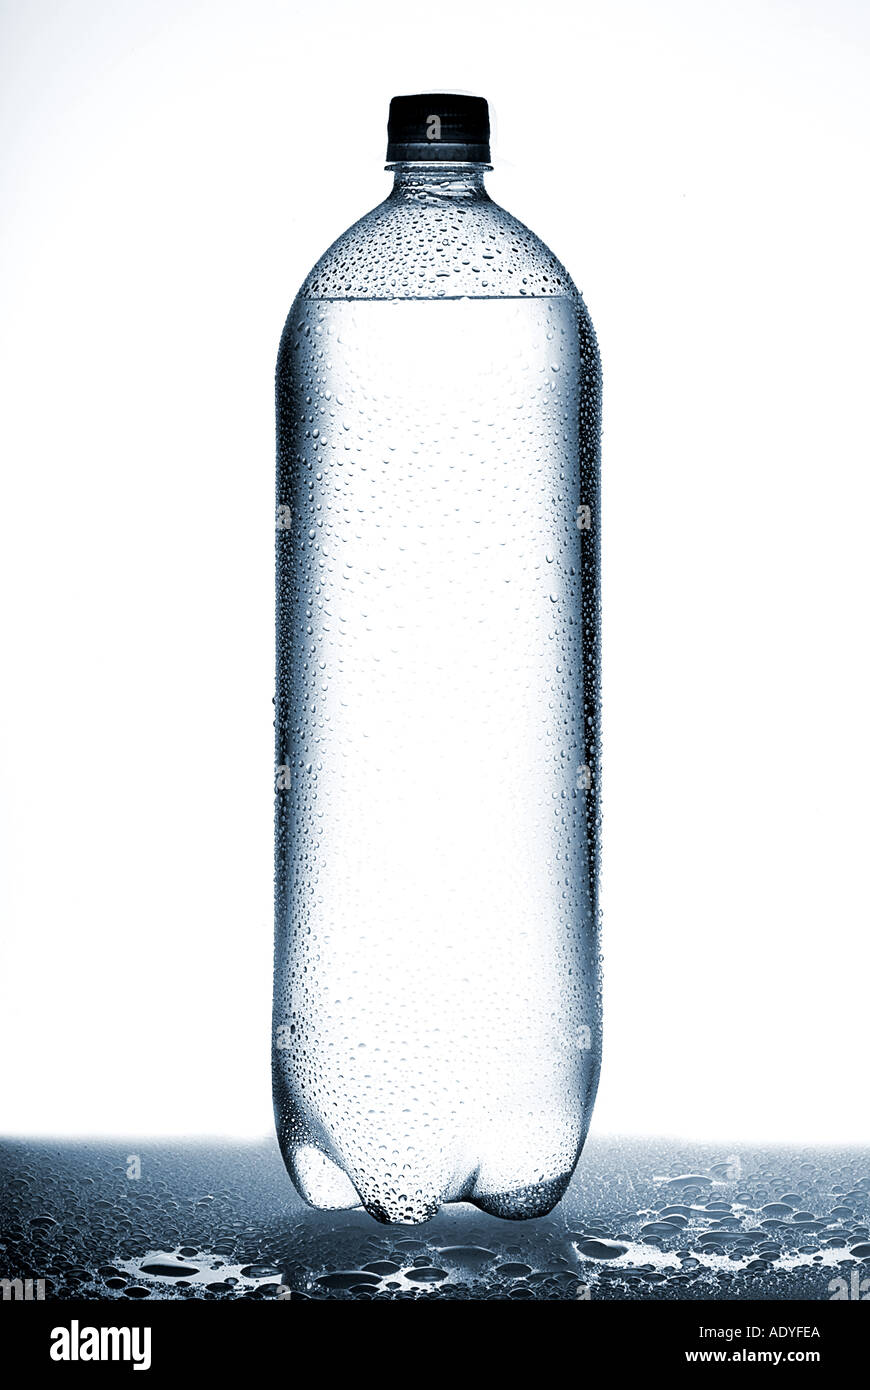 Botella 2L Transparente